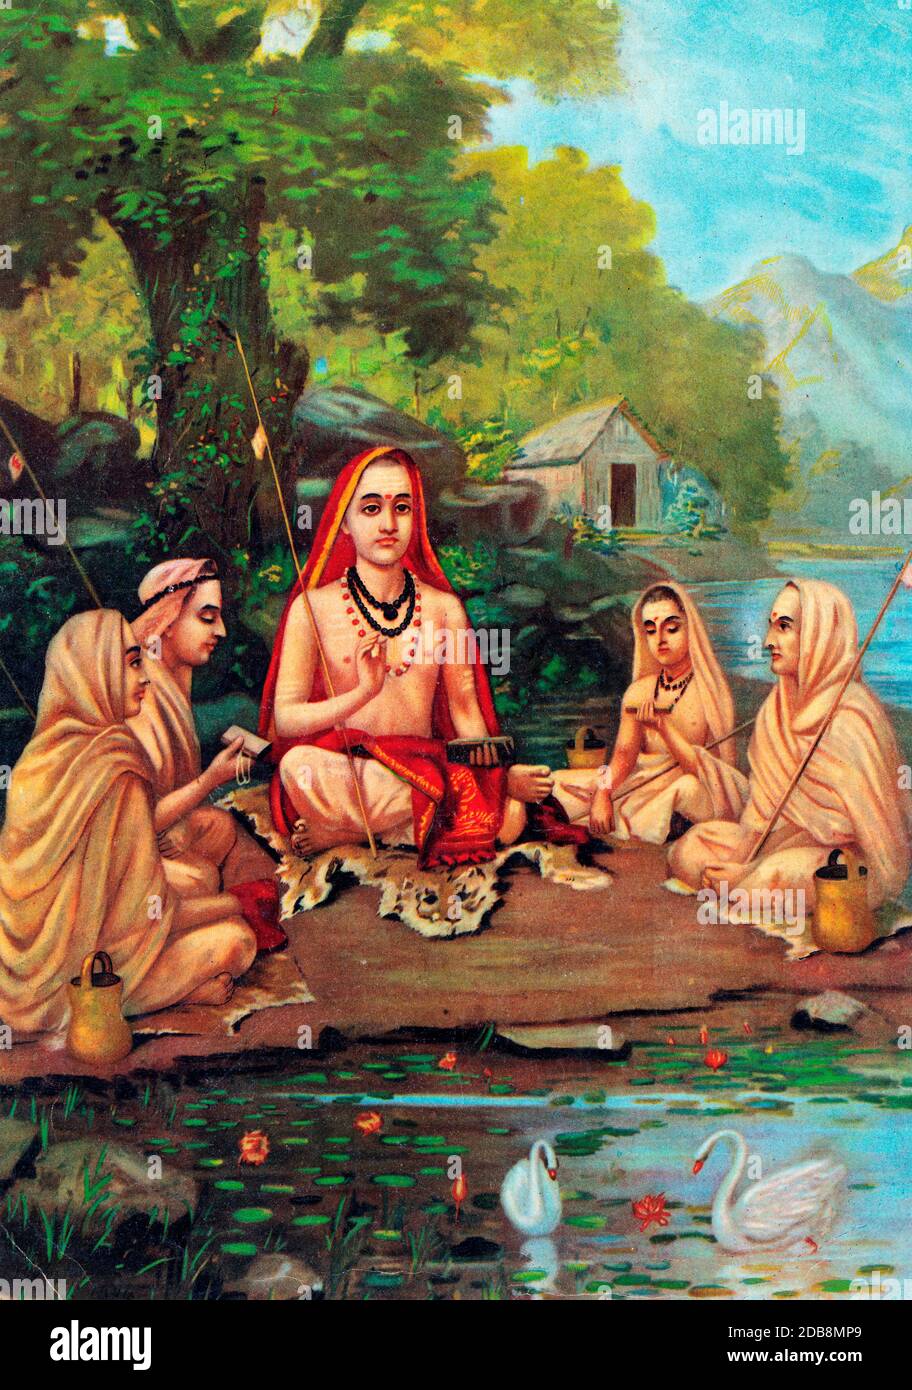 Adi Shankara (788-820), founder of Advaita Vedanta, with disciples, by Raja Ravi Varma, 1904 Stock Photo